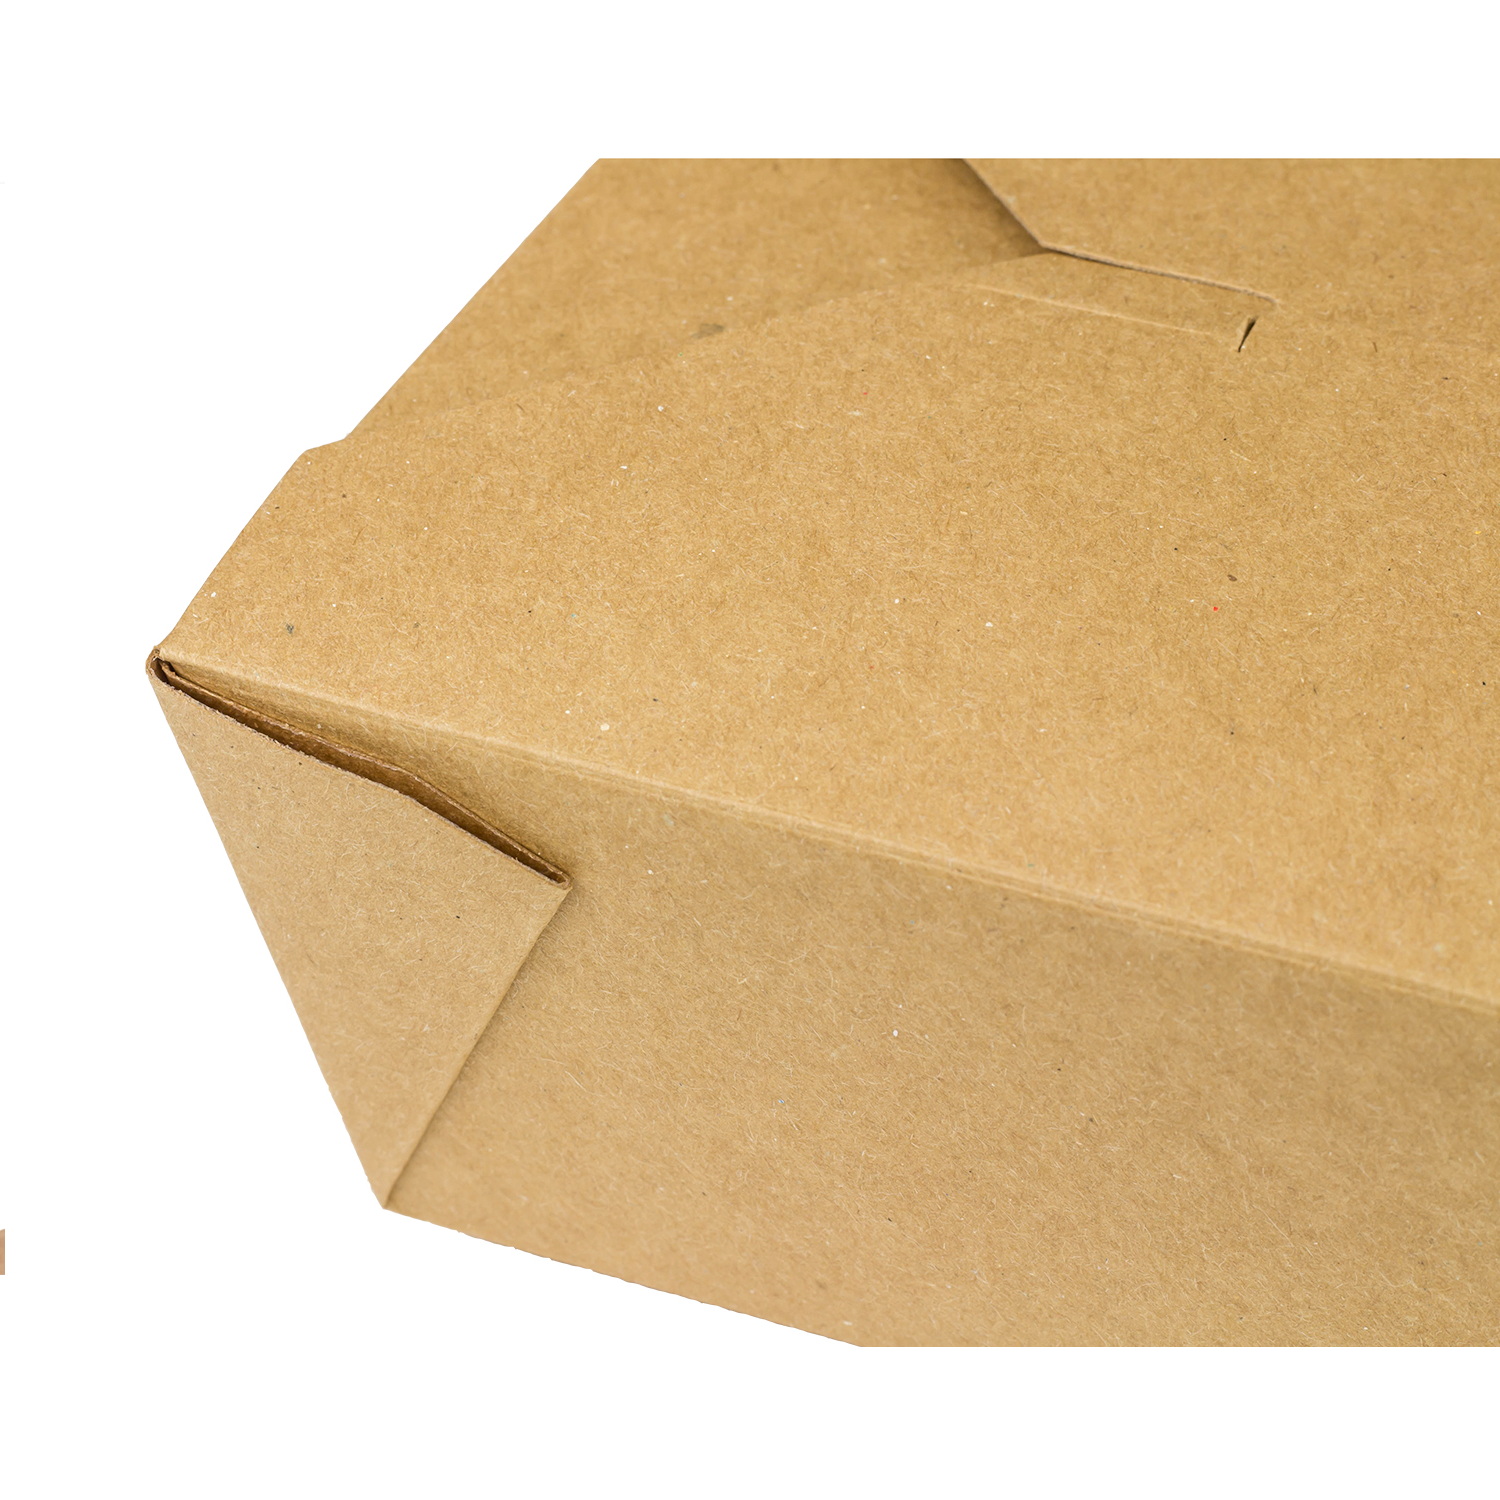 Eco Pie Kraft and Black Paper Corrugated Flatbread Box - 16 inch x 8 inch x 1 1/2 inch - 50 Count Box, Size: One Size